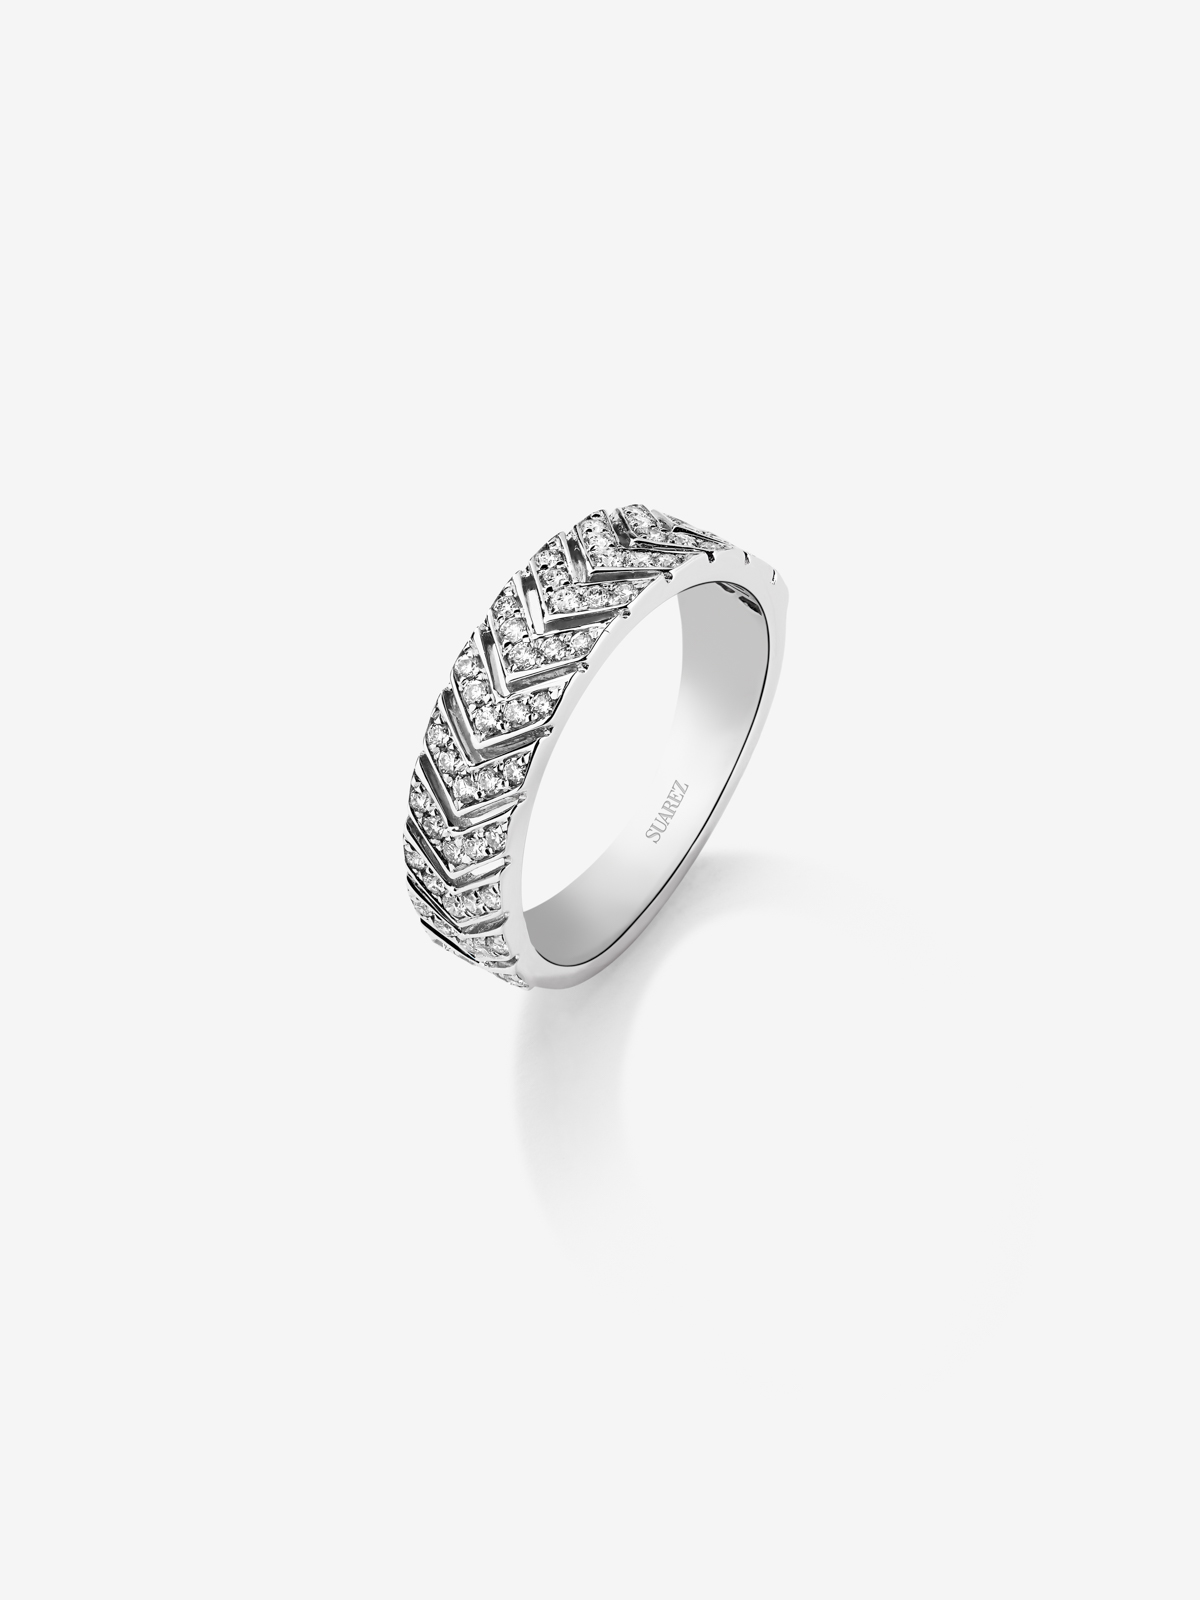 18K white gold wedding ring with diamond.